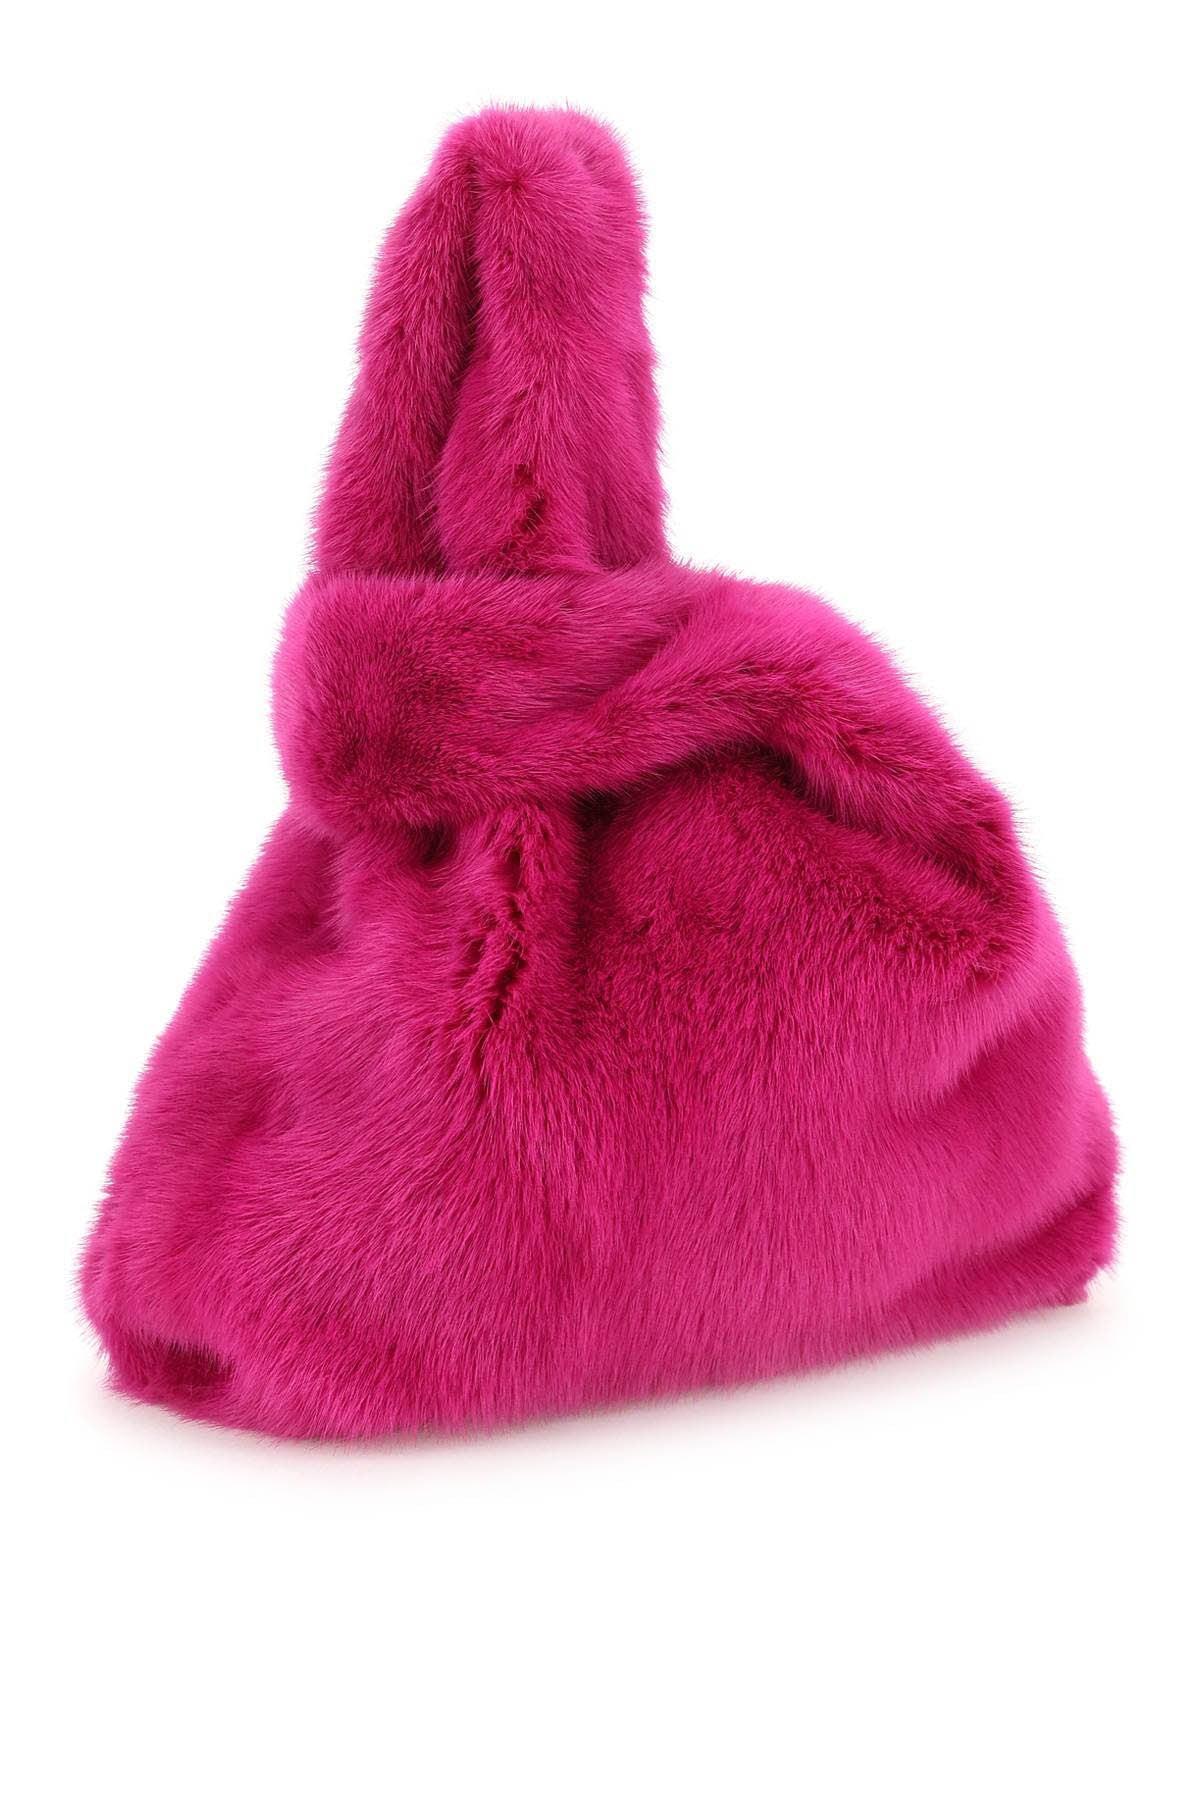 Simonetta Ravizza Furrissima Bag in Pink | Lyst